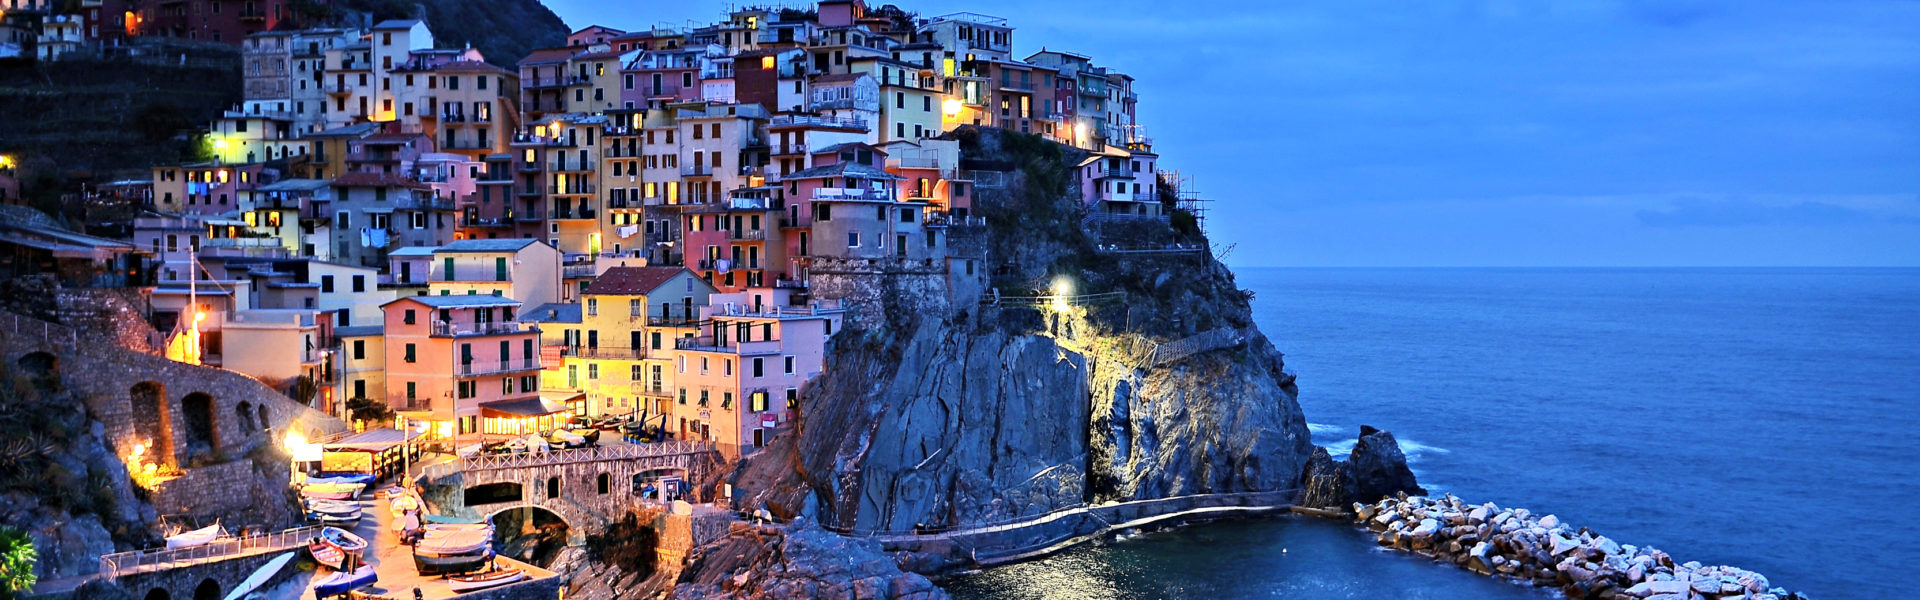 Our Top Ten Favorite Destinations Bucket List #7: Italy